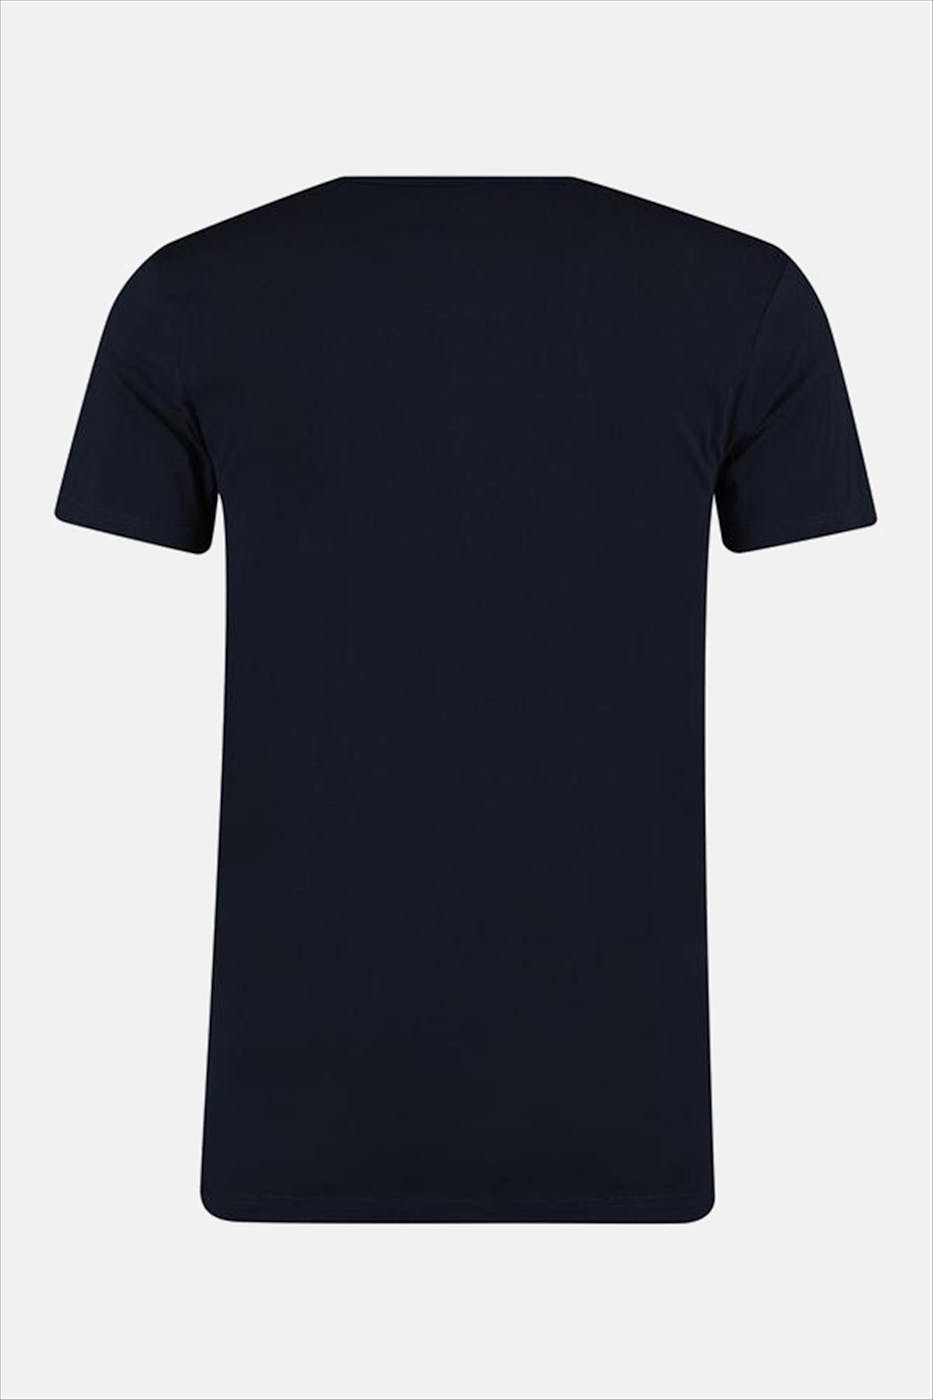 Garage - Donkerblauwe 2-pack Body Fit O-Neck T-shirts